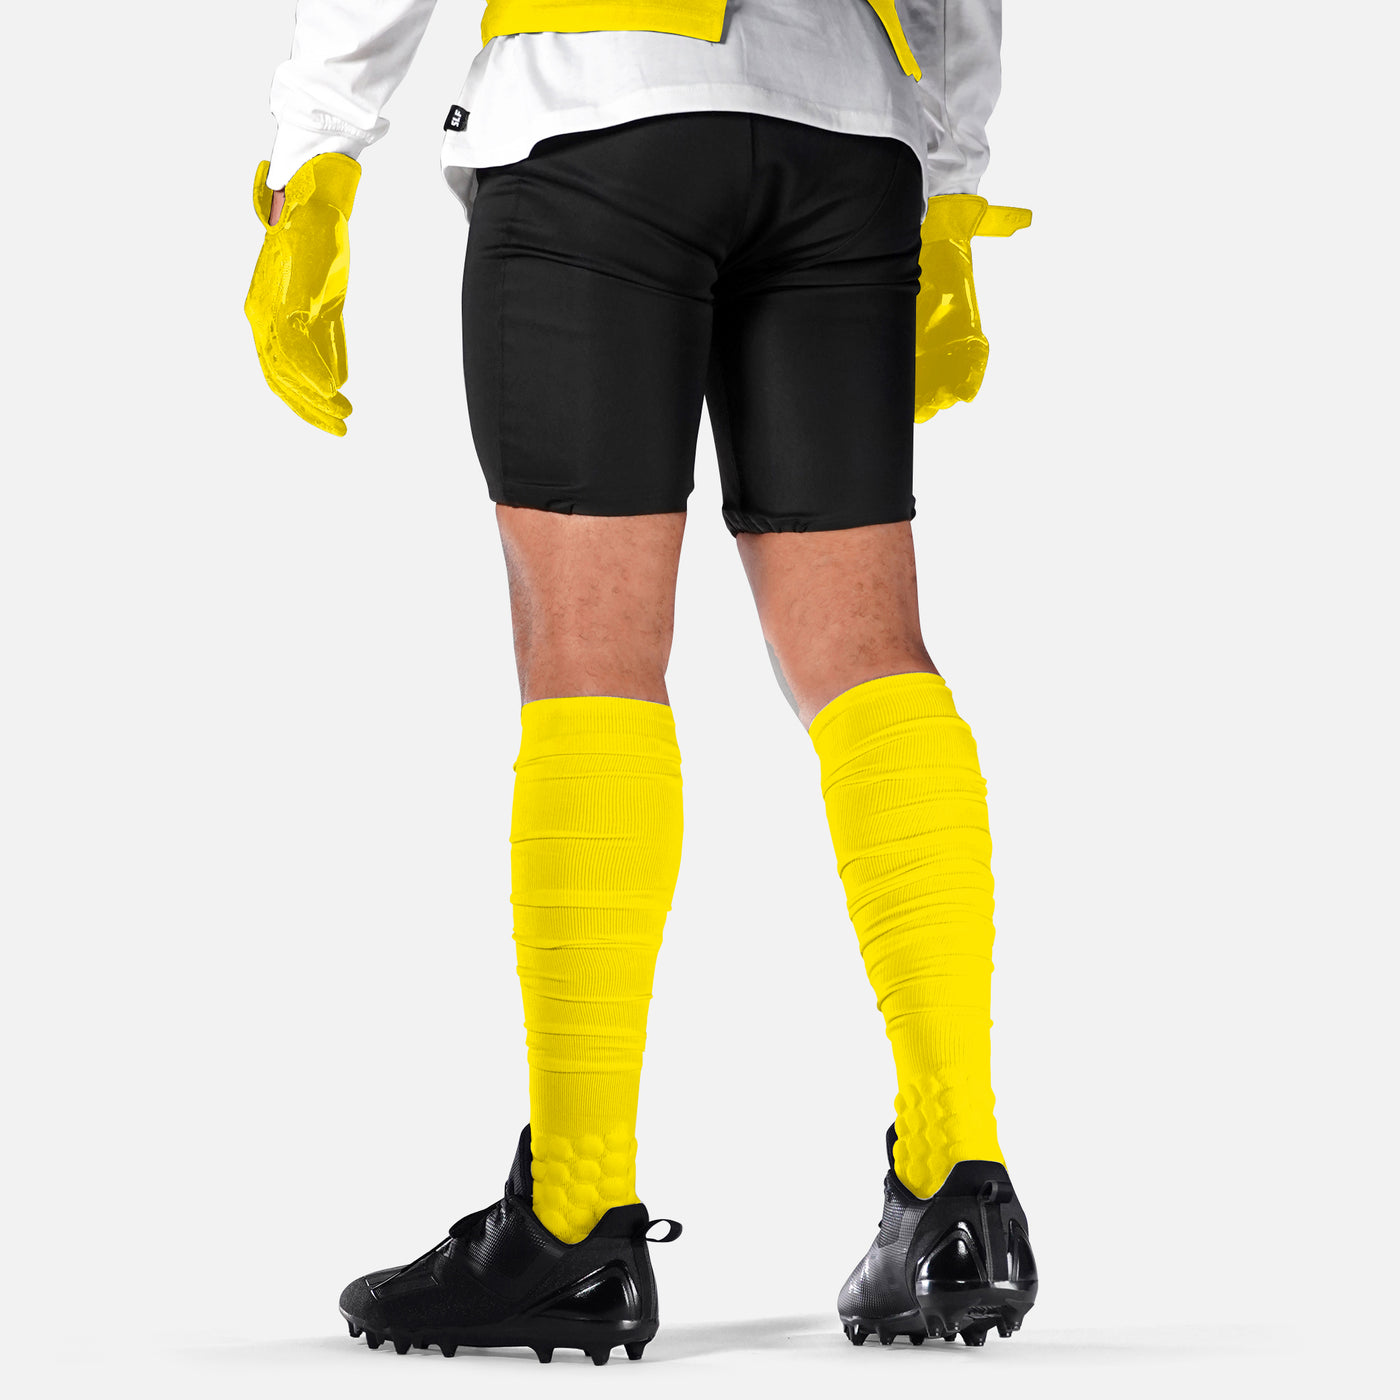 Hue Yellow Football Padded Long Socks